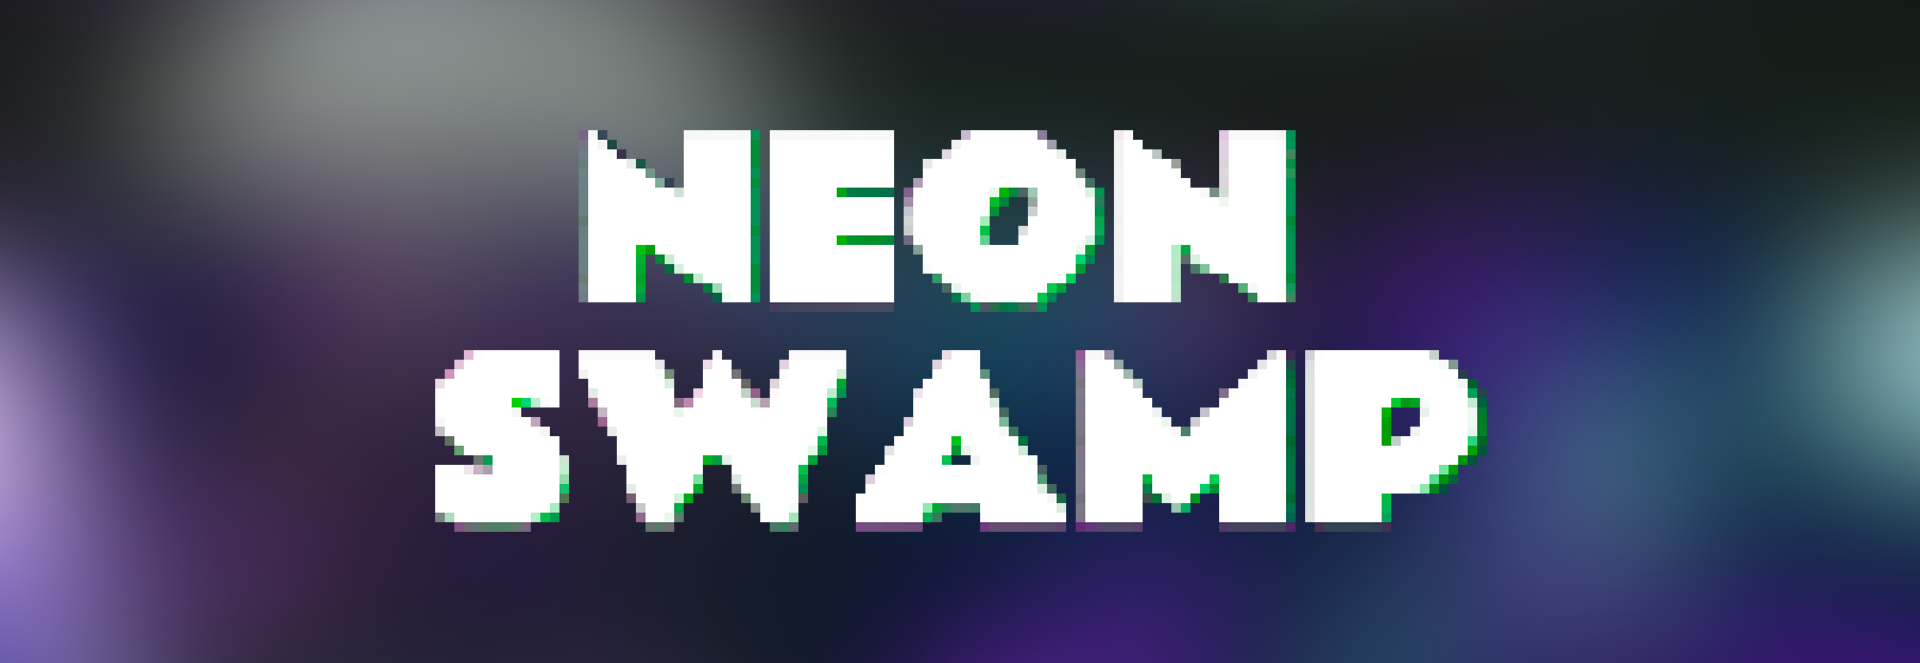 Neon Swamp